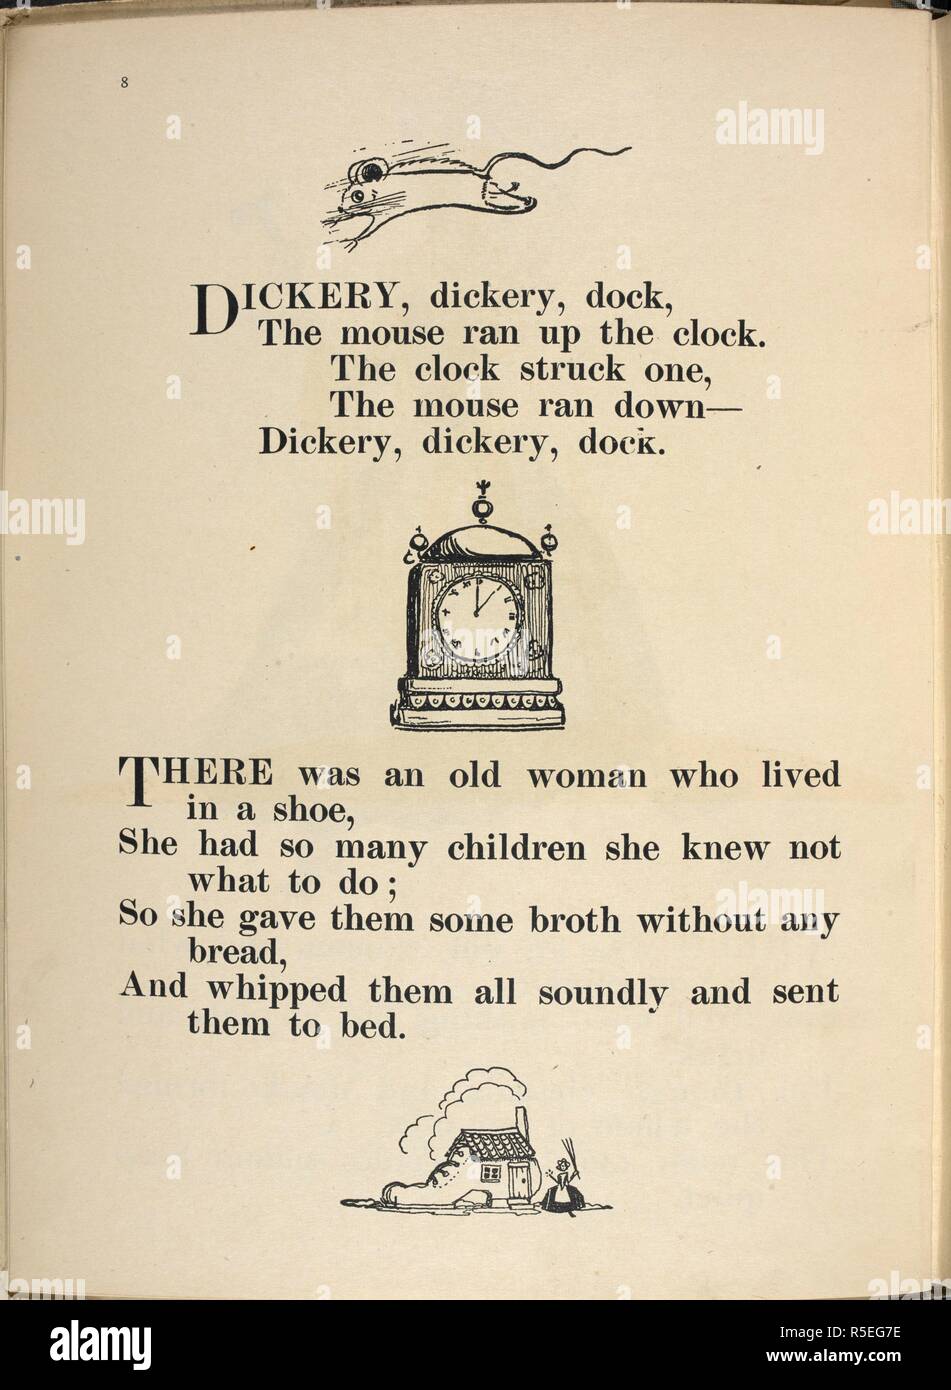 Dickery, dickery dock, the mouse ran up the clock.'. Nursery